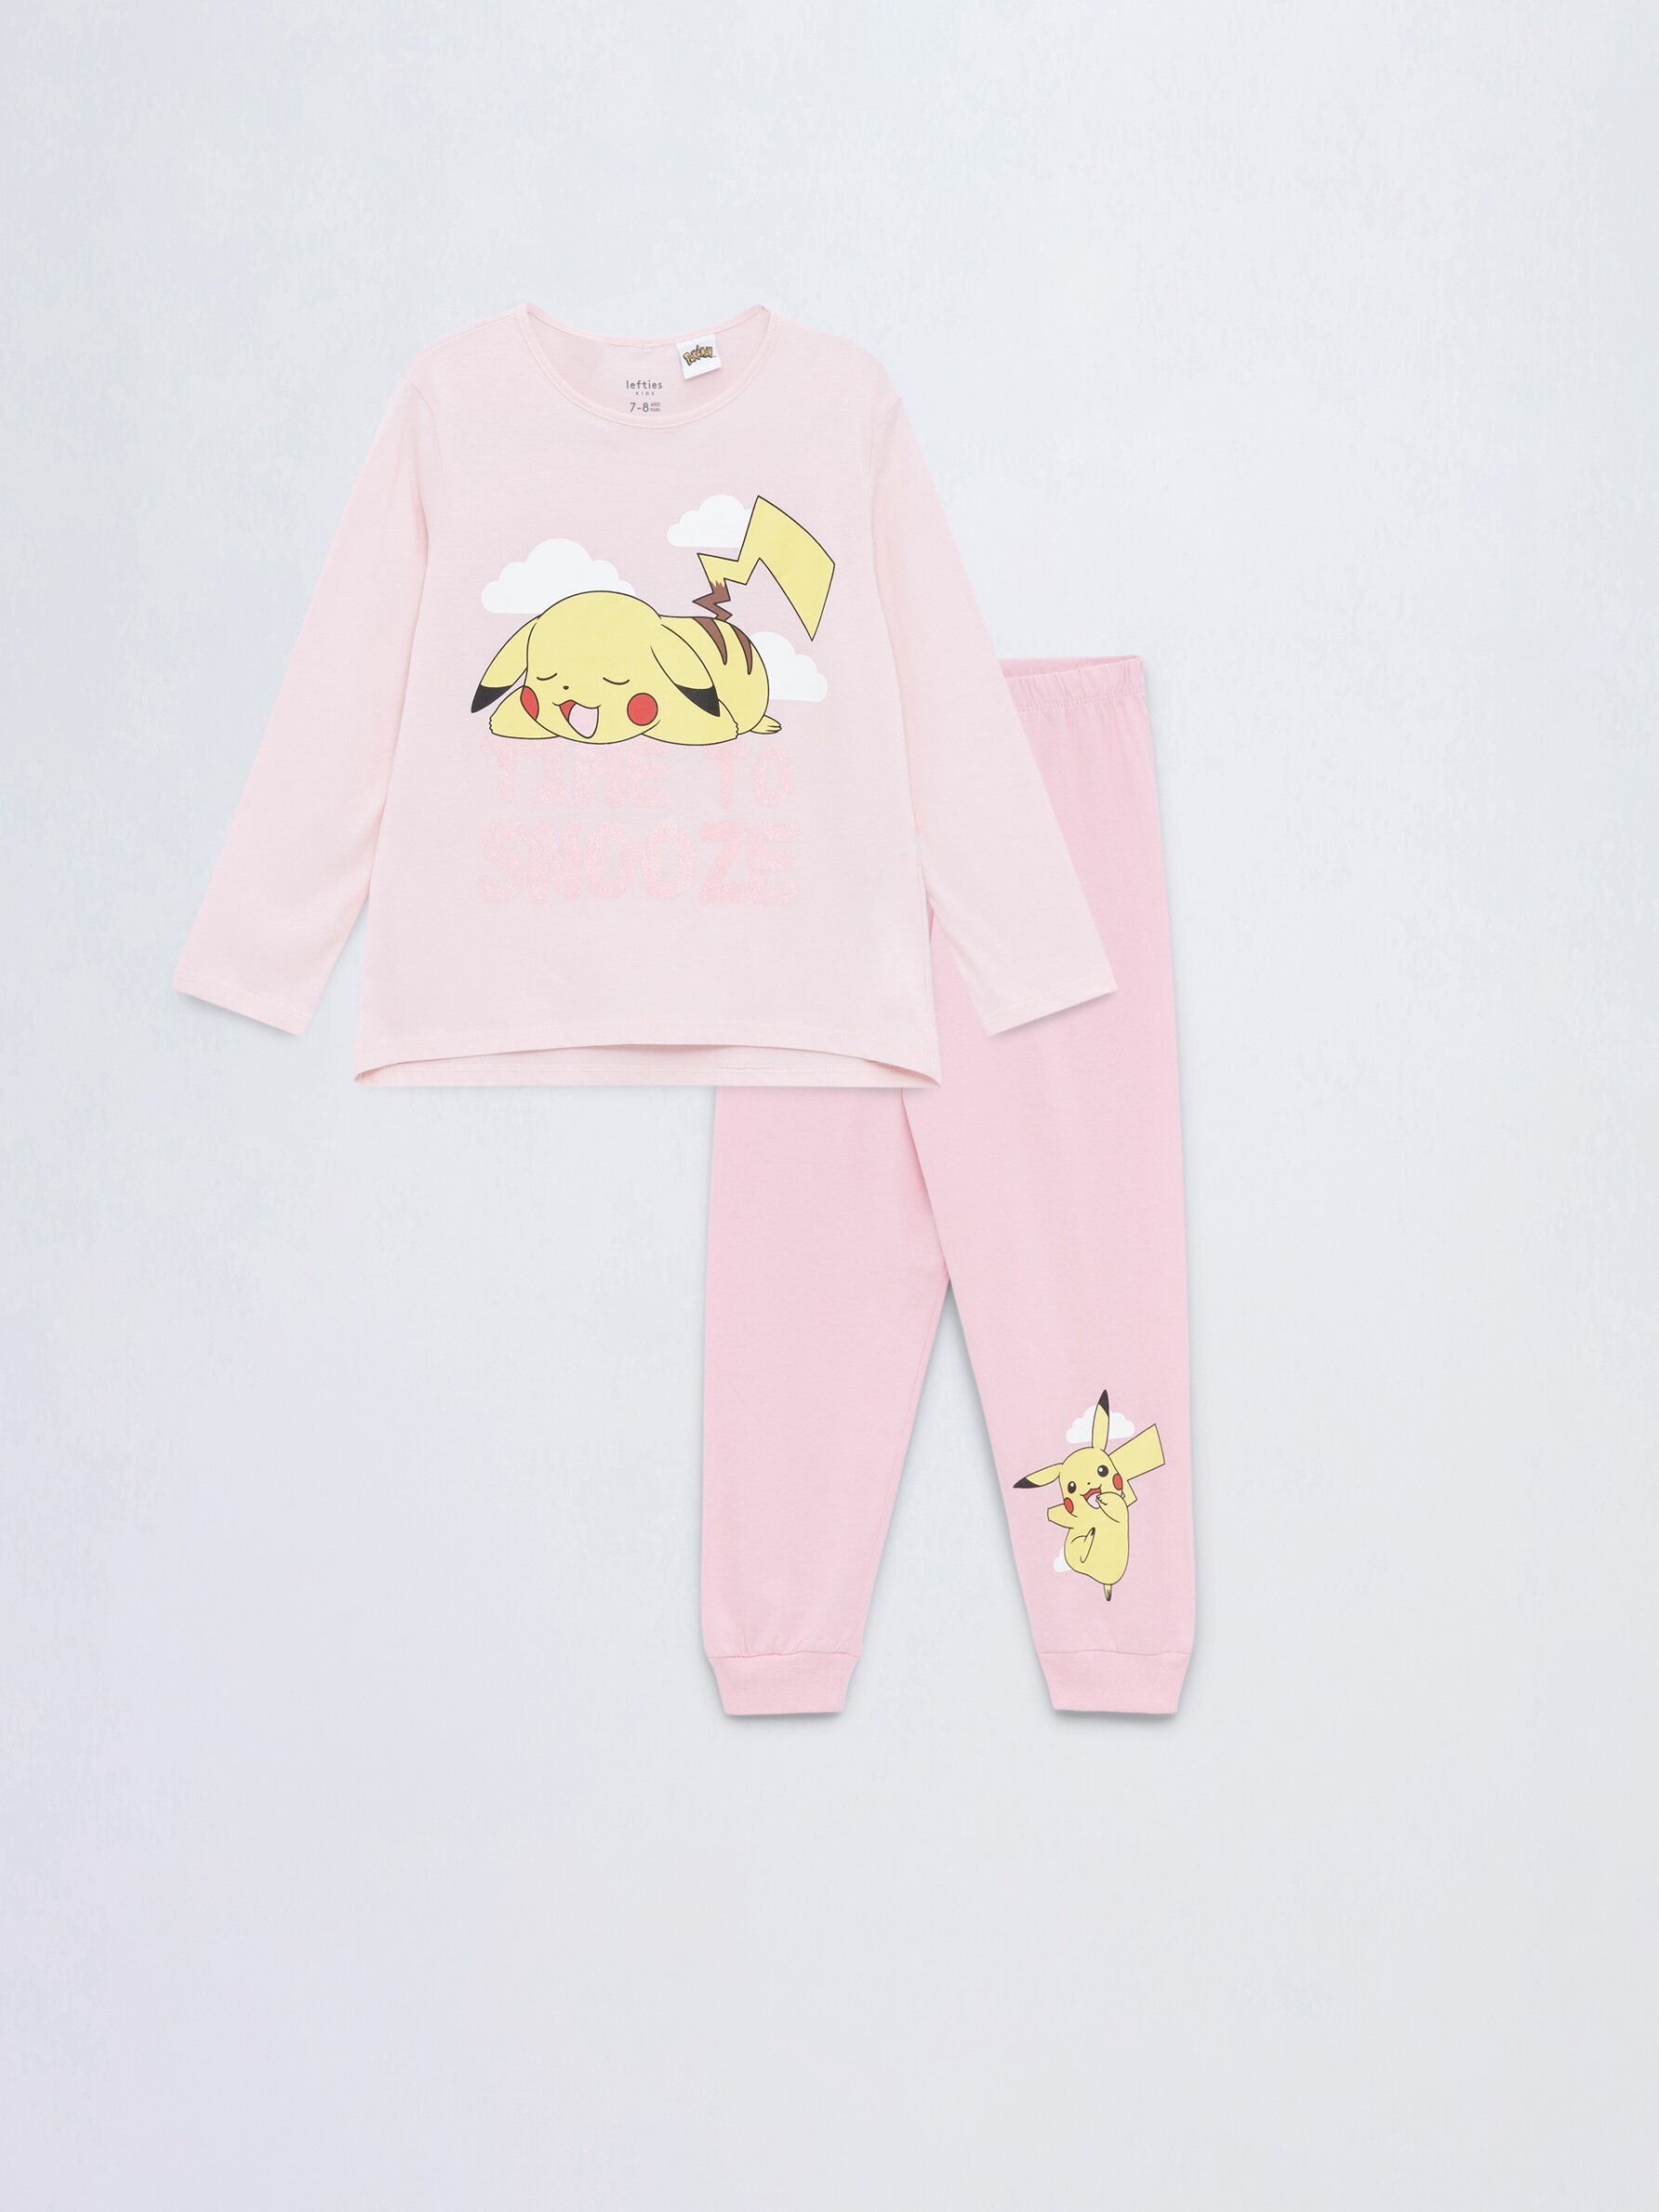 Preços baixos em Pokémon 8 Tamanho pijamas para meninos